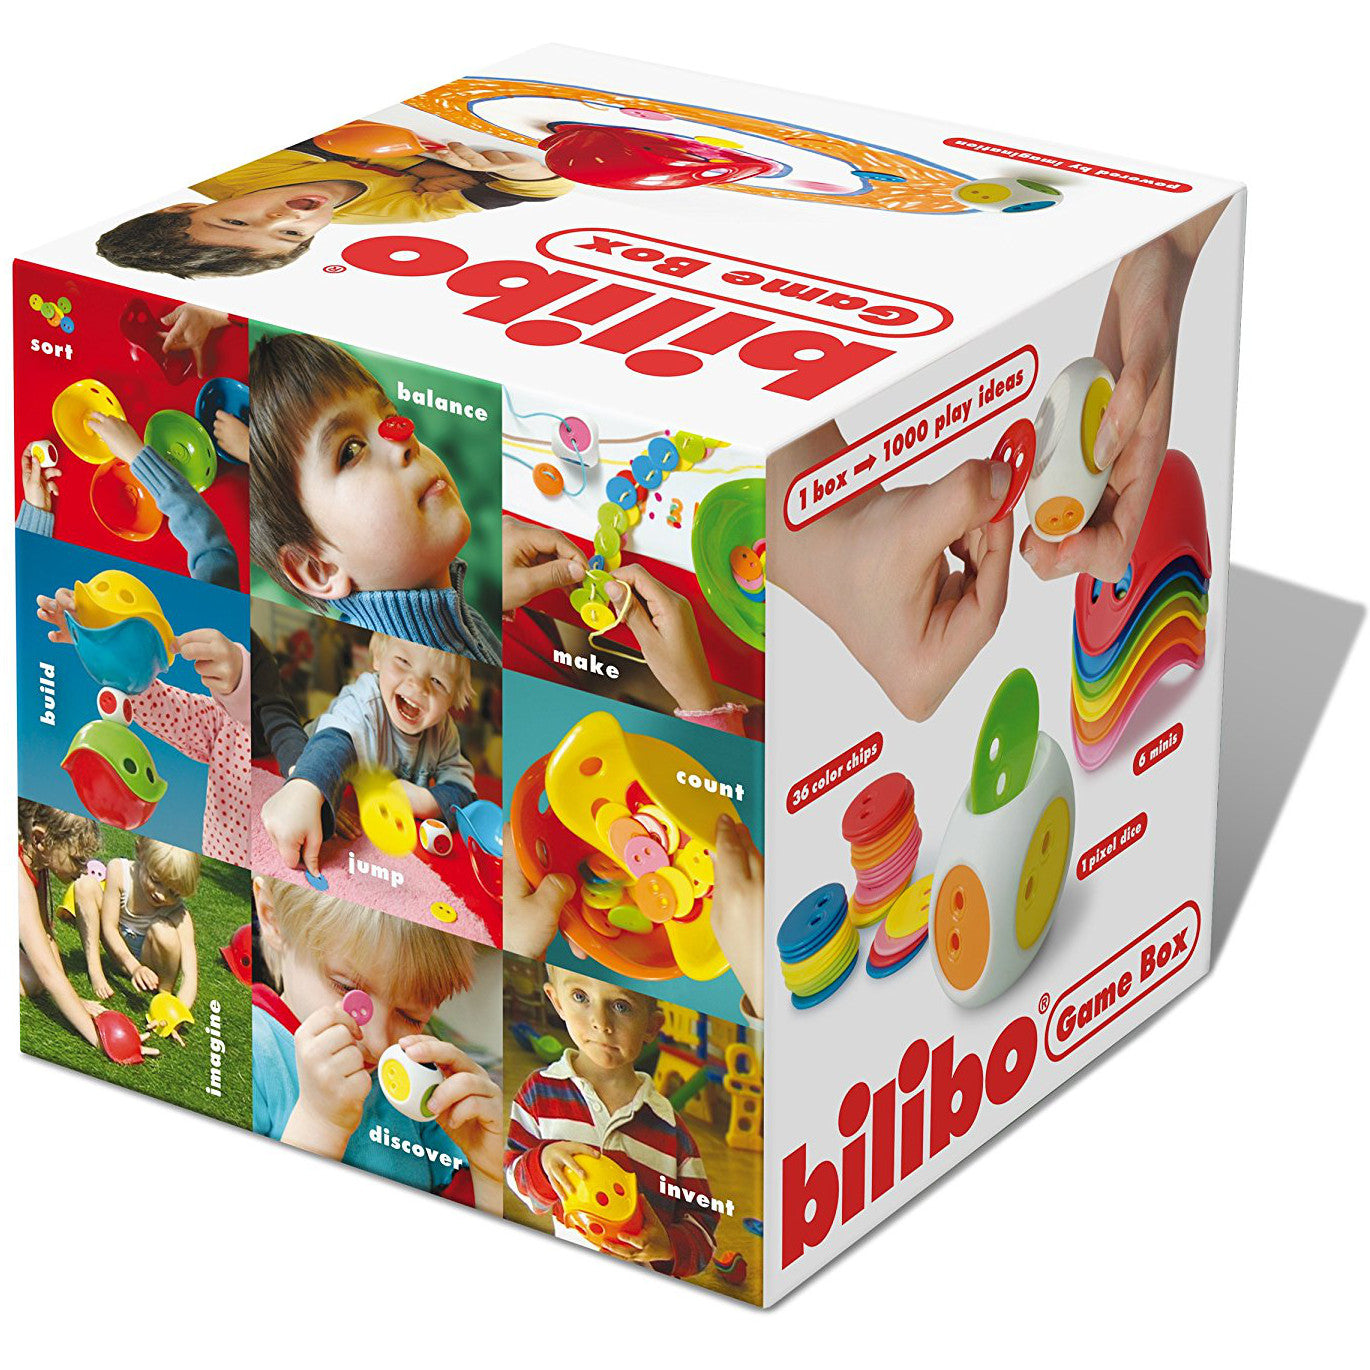 Bilibo Game Box - K and K Creative Toys